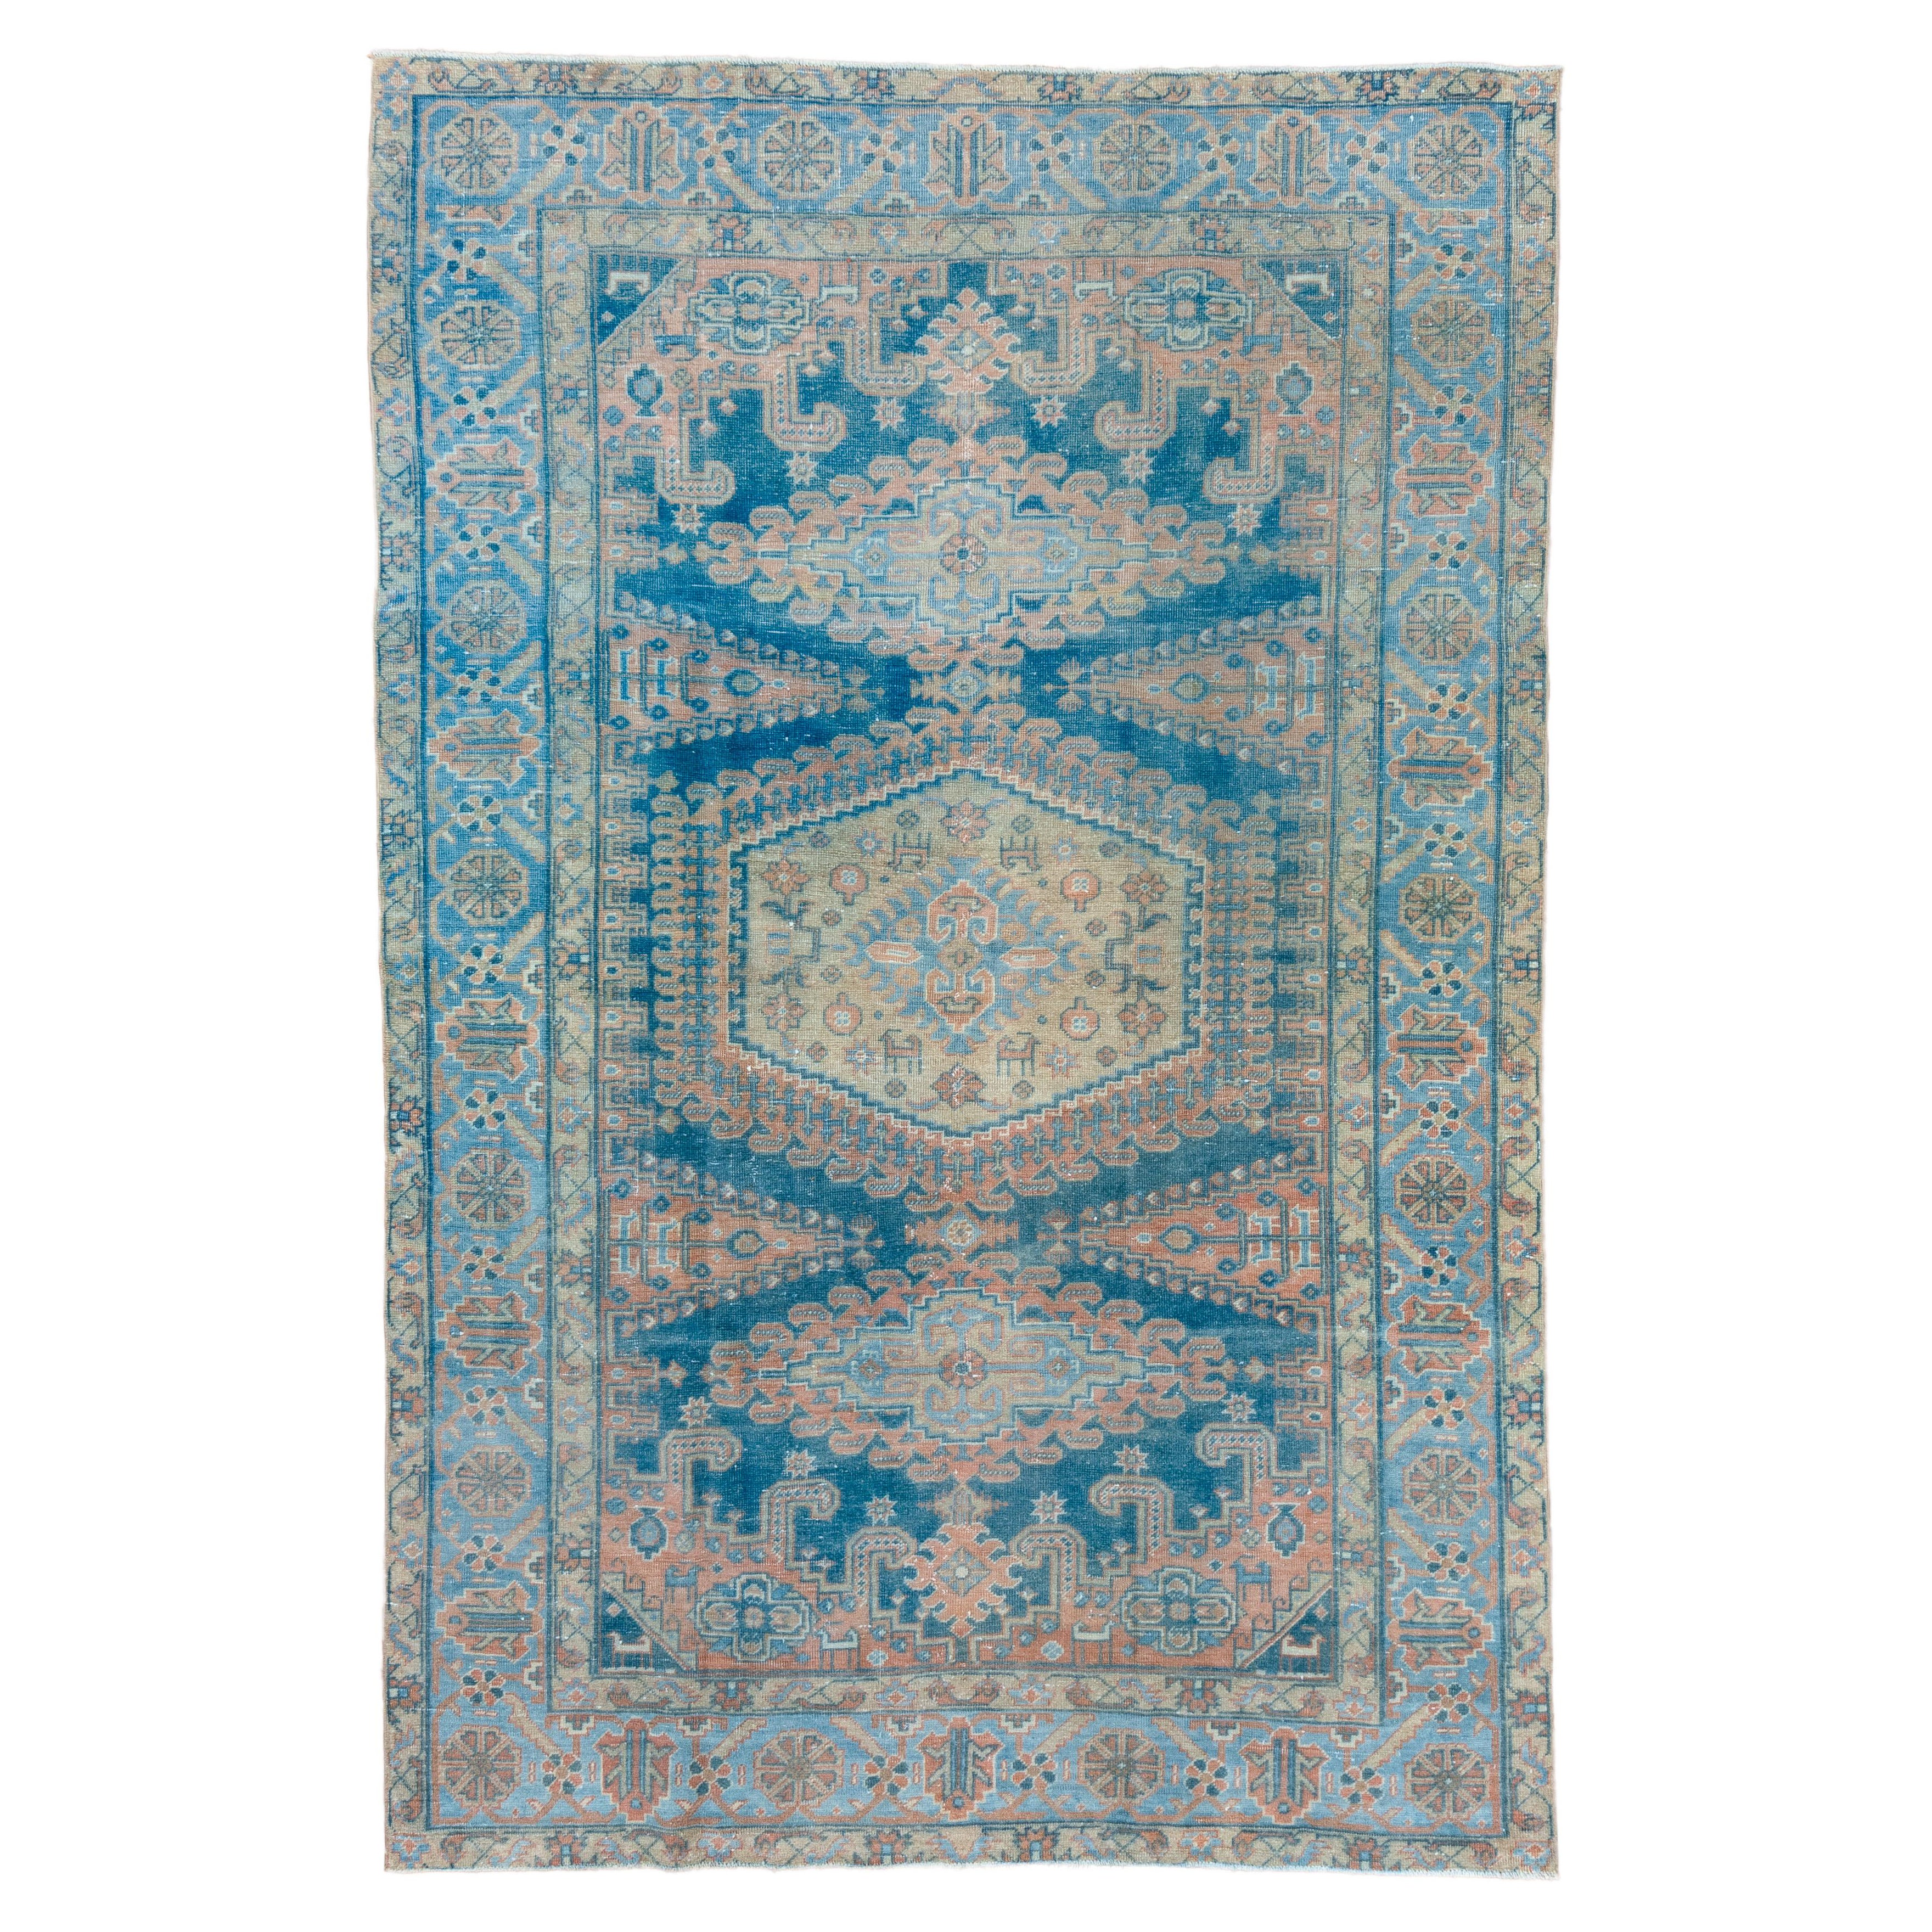 Mid 20th Century , Beautiful Antique Persian Veece Carpet, Blue and Salmon Tones For Sale